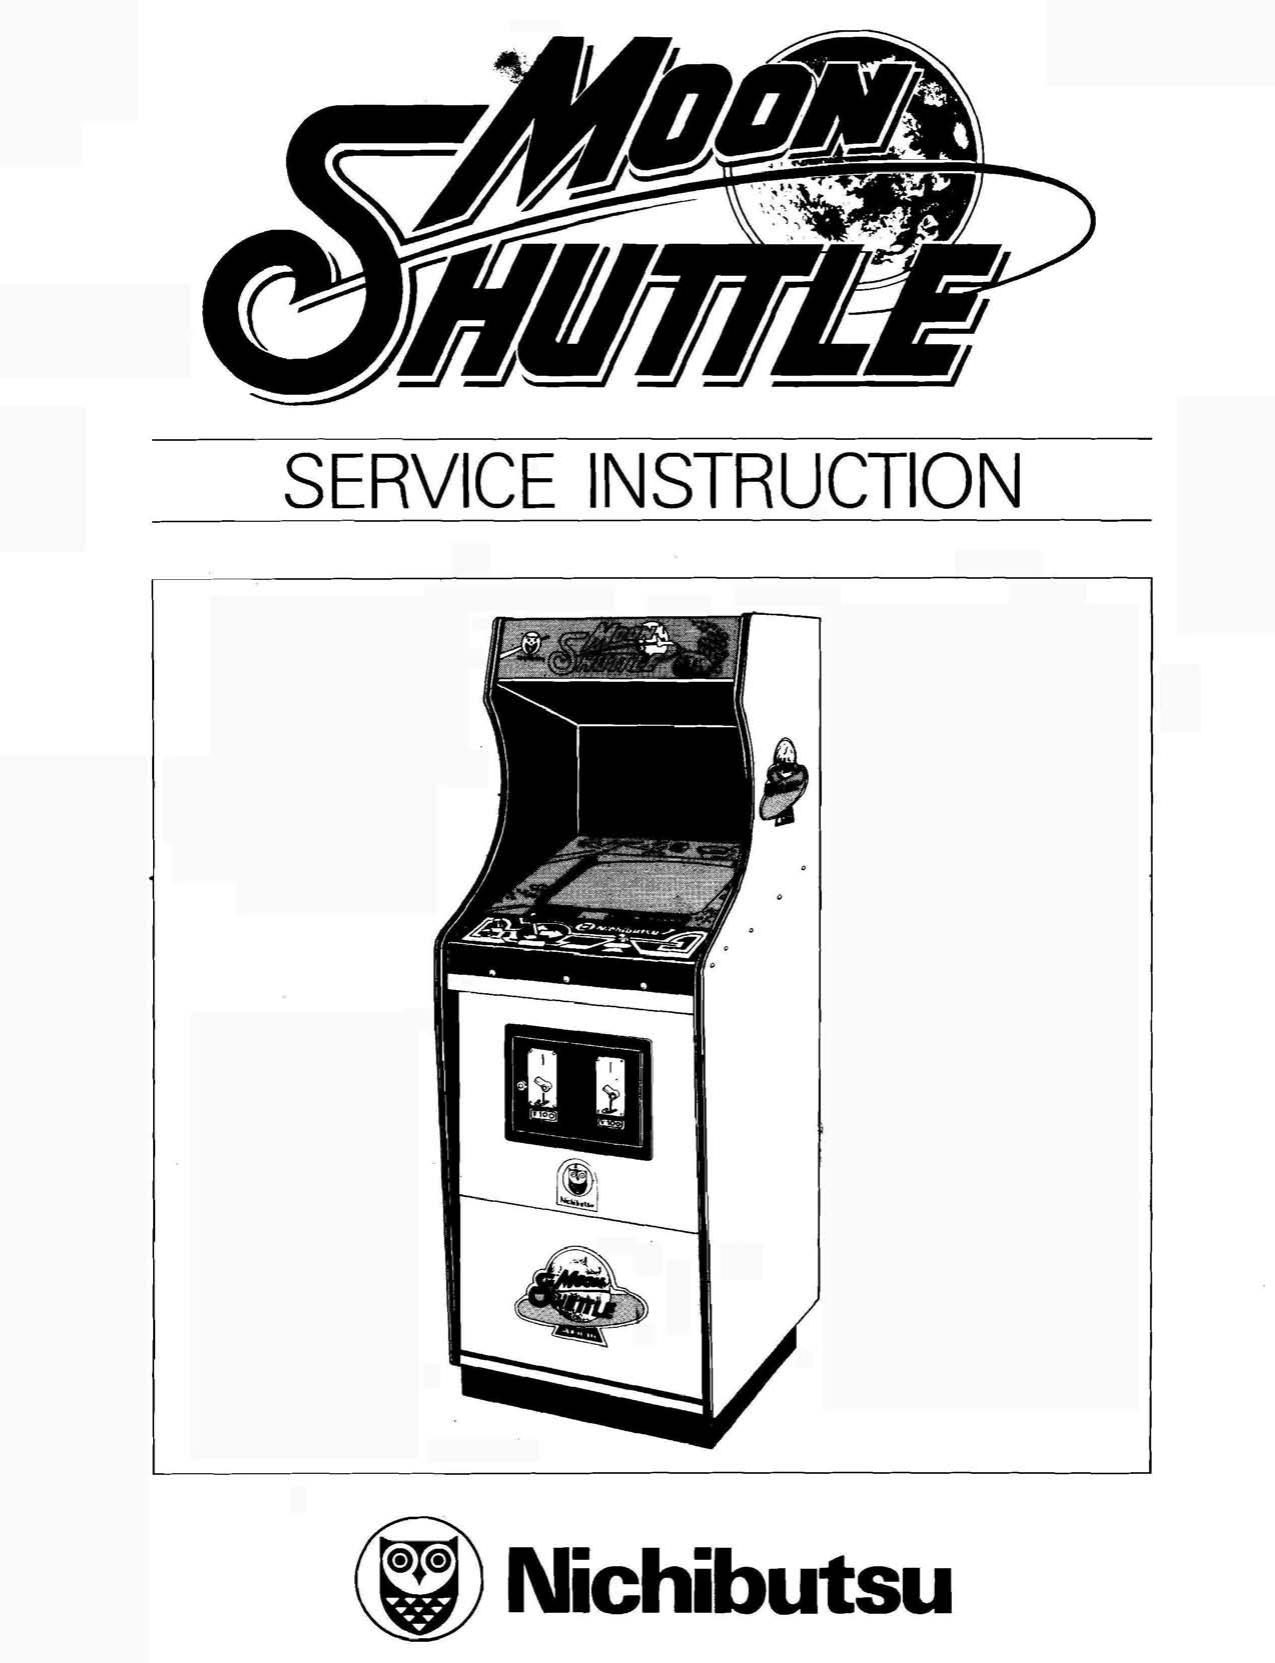 Moon Shuttle Service Instruction (Nichibutsu)